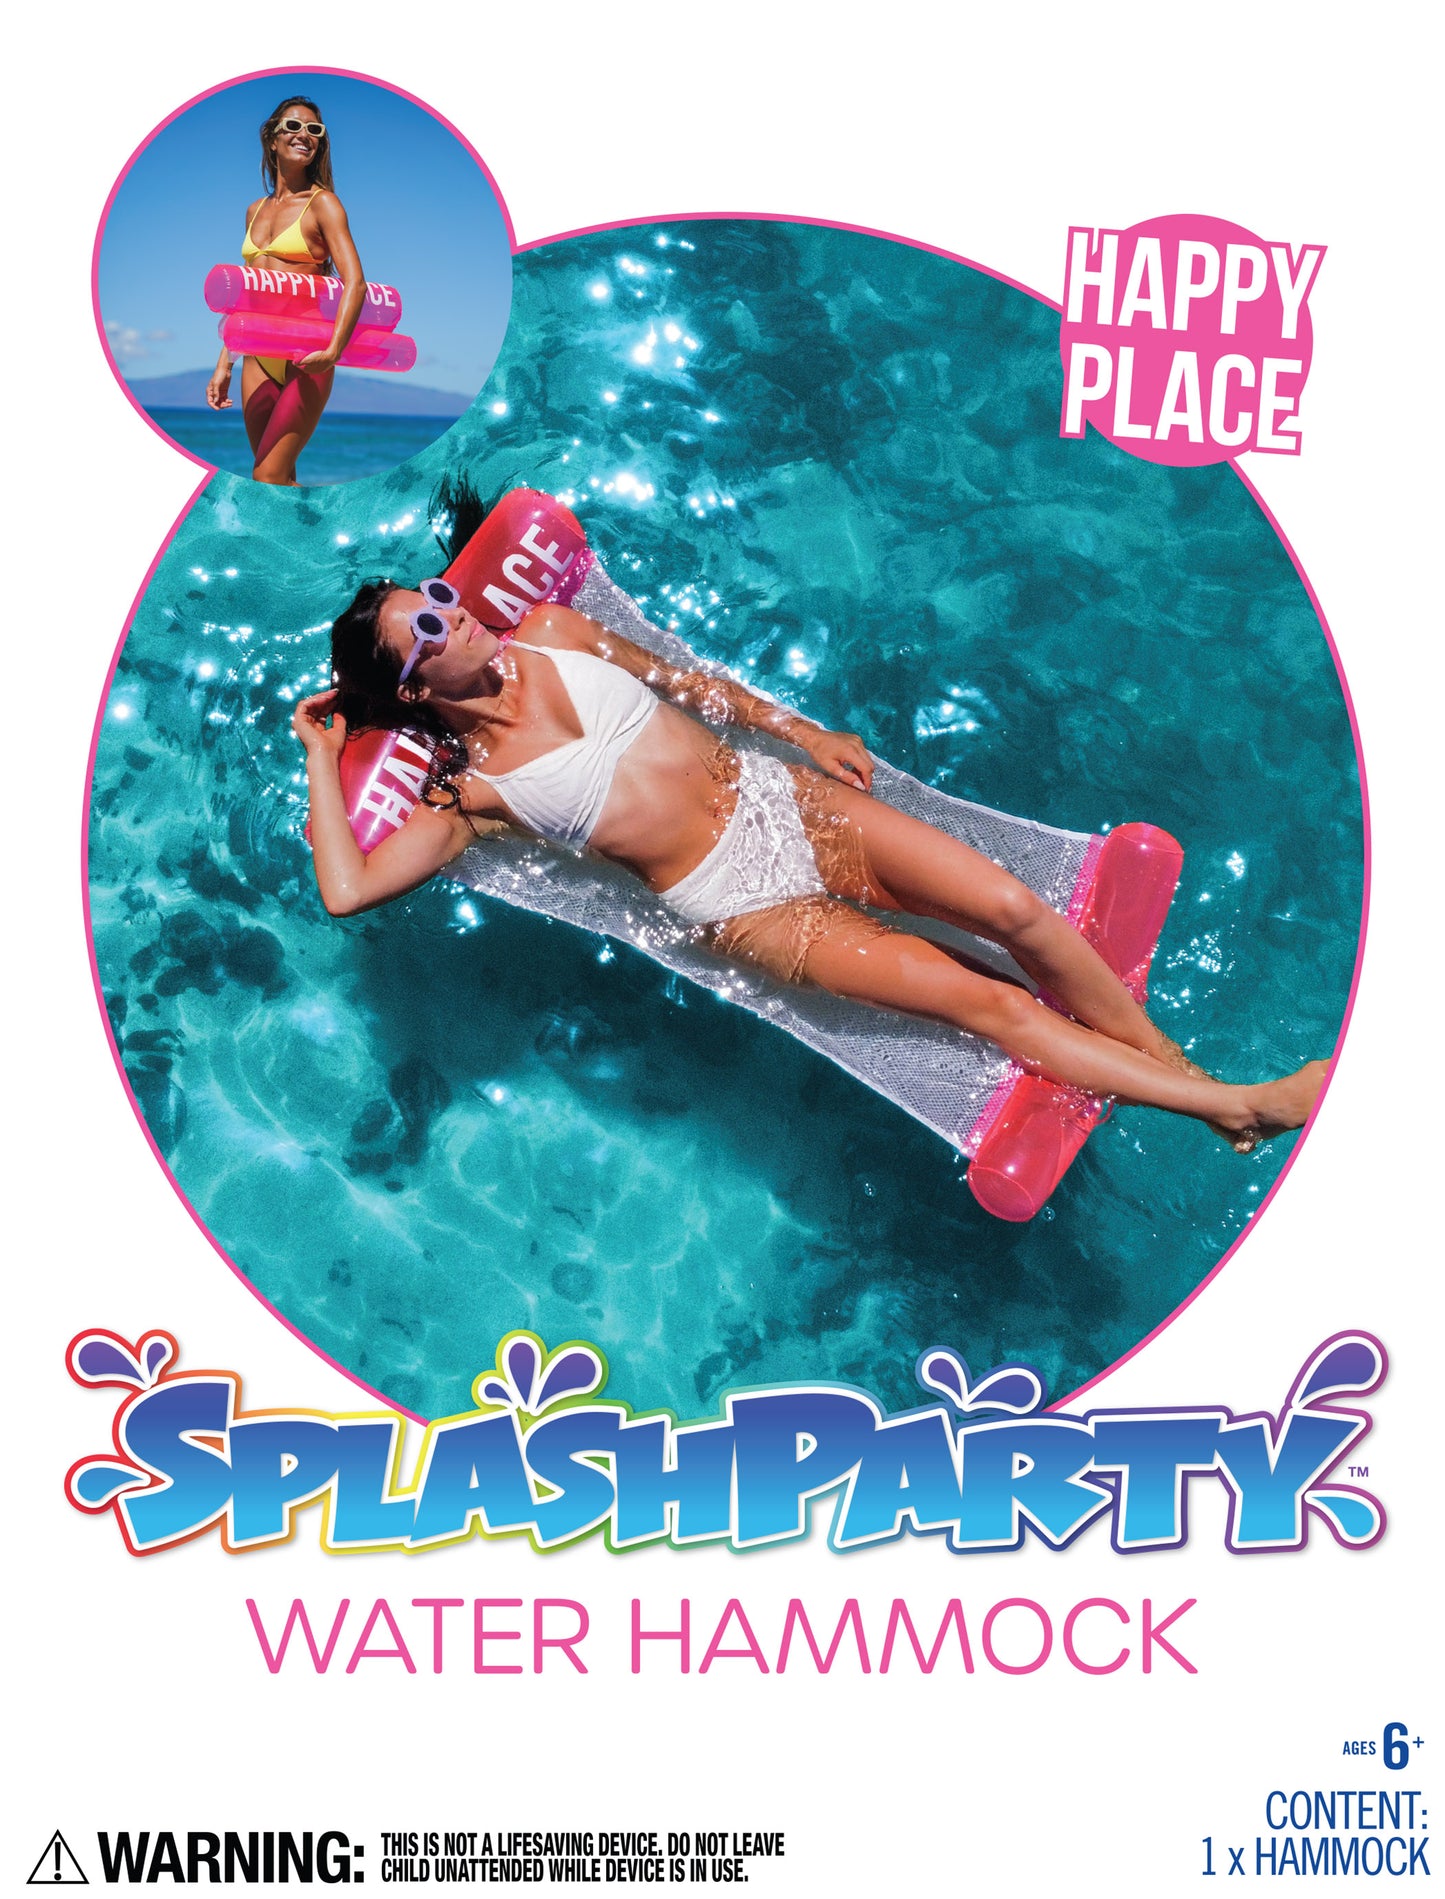 SplashParty Pool Hammock - Bubblegum Pink - "Happy Place"